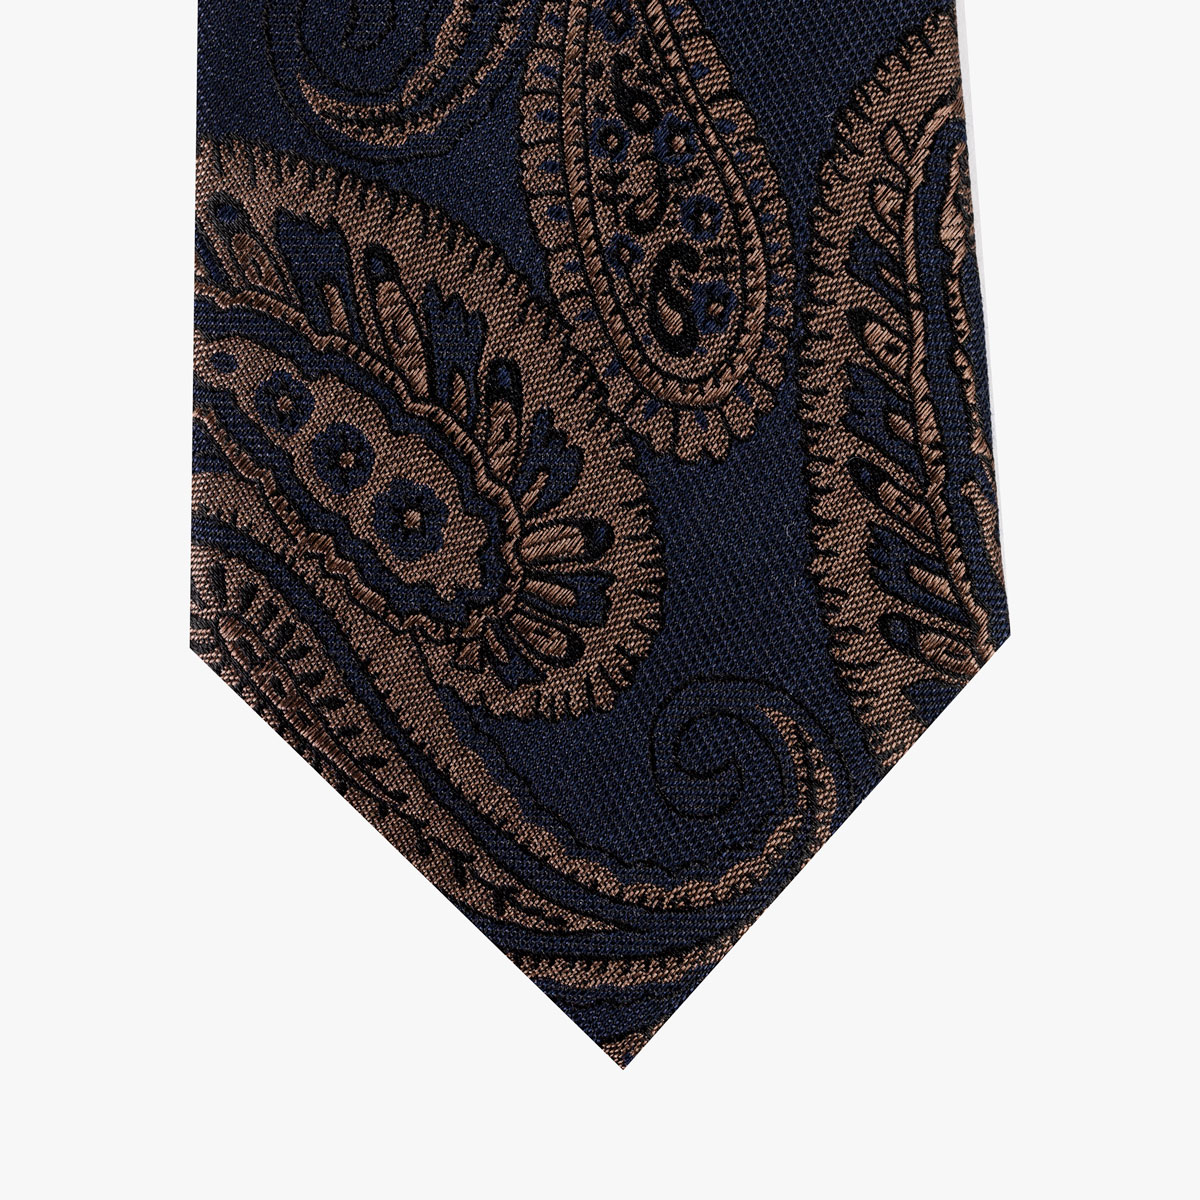 Krawatte mit Paisley in dunkelblau braun